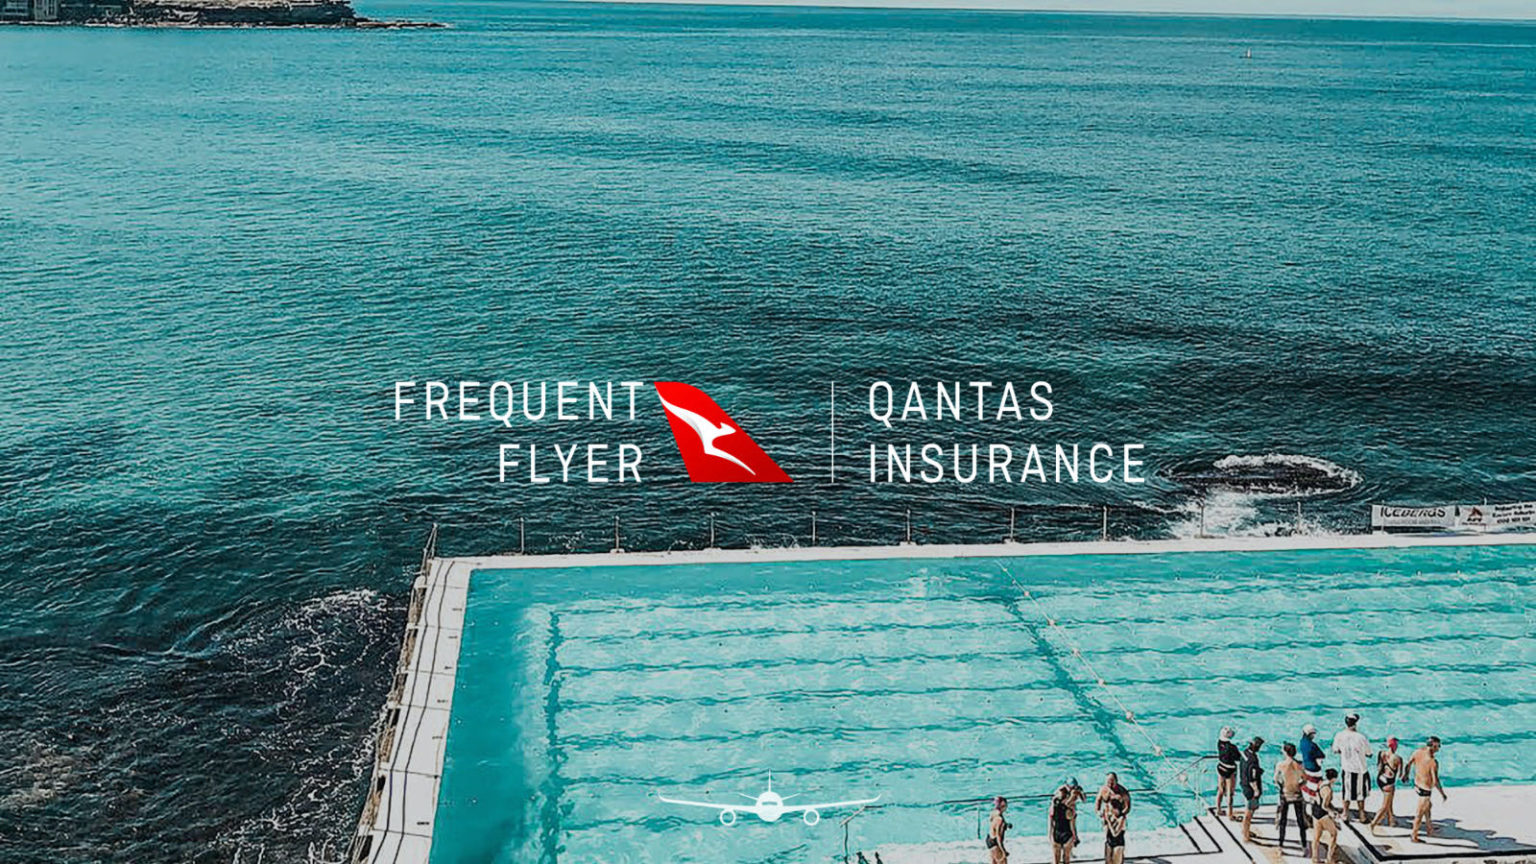 does qantas travel insurance cover hire car